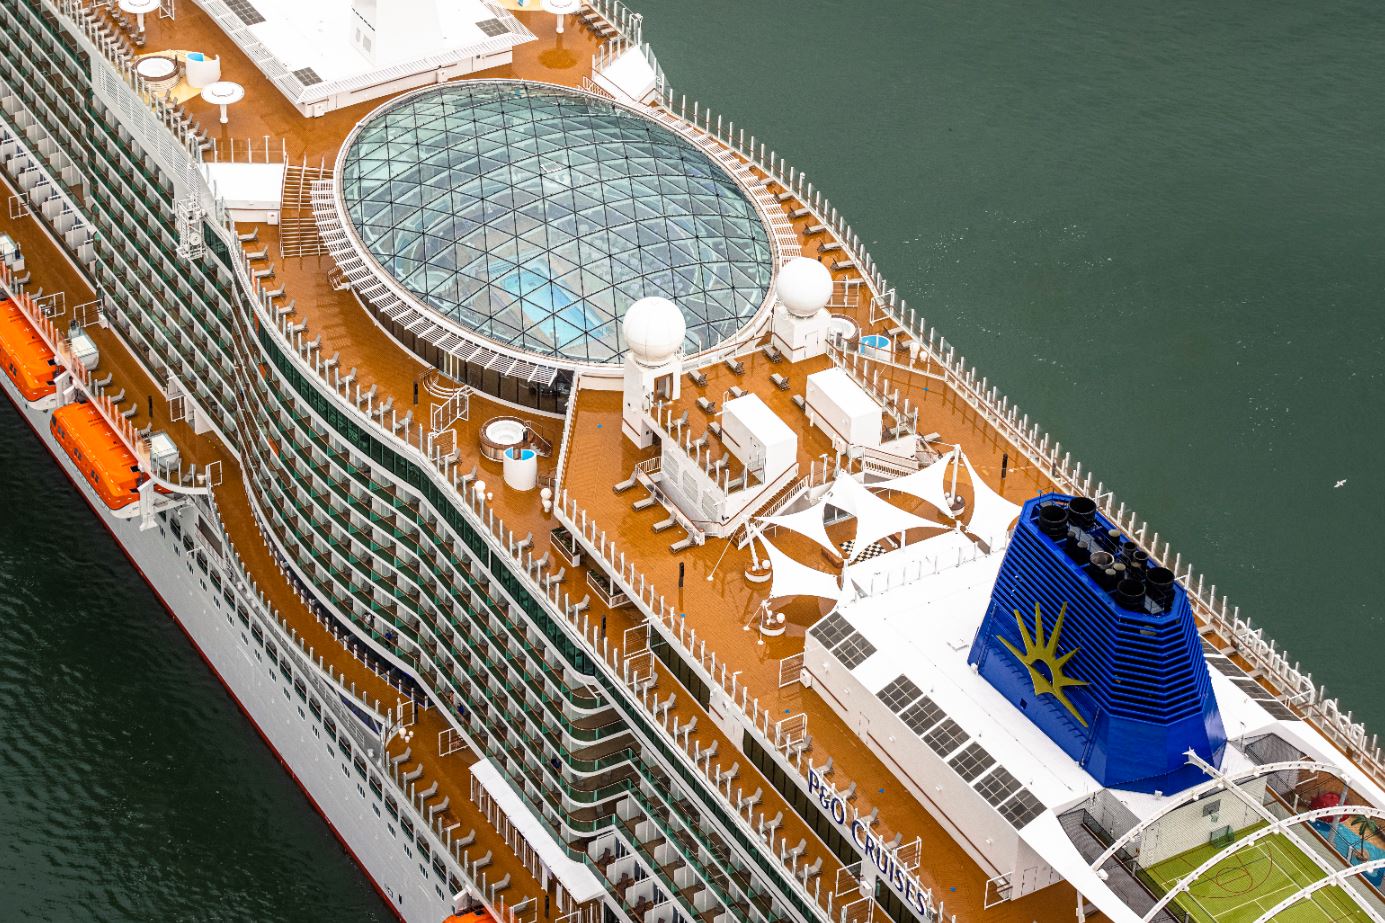 P&O Cruises Iona named in recordbreaking virtual ceremony CruiseToTravel